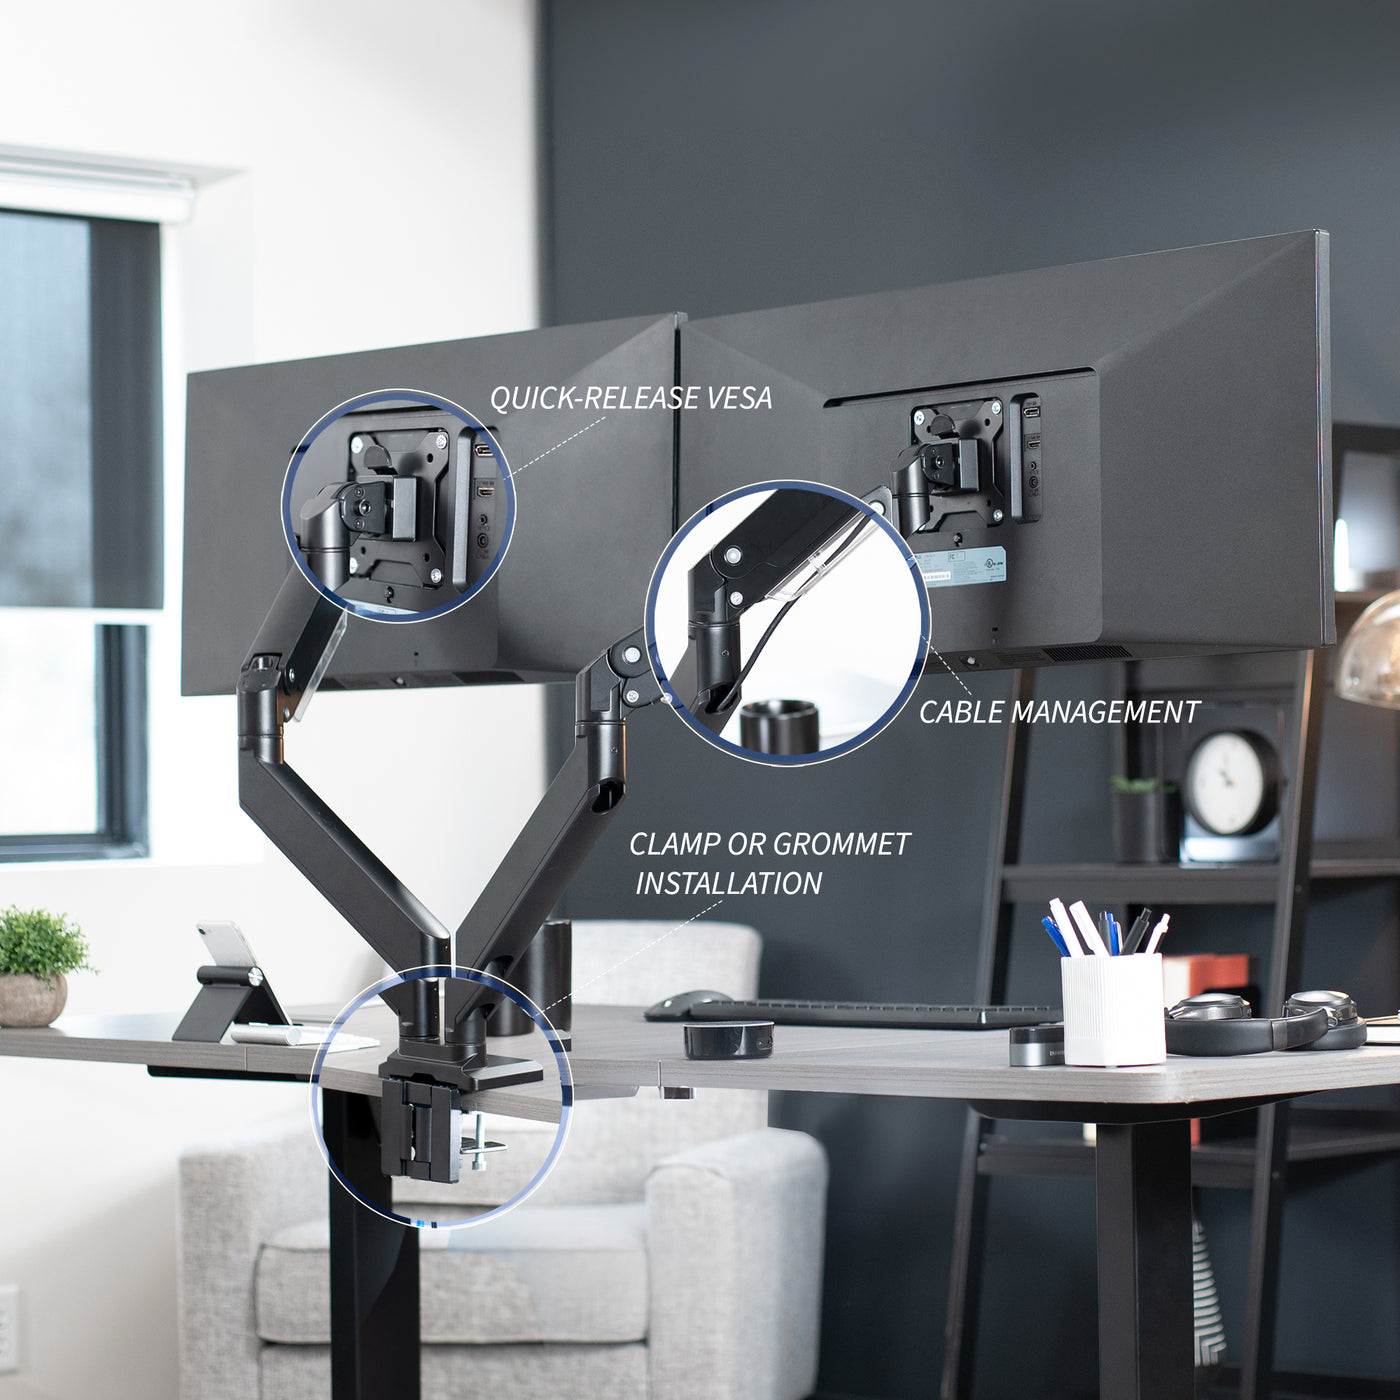 Pneumatic Arm Dual Ultrawide Monitor Desk Mount – VIVO - desk